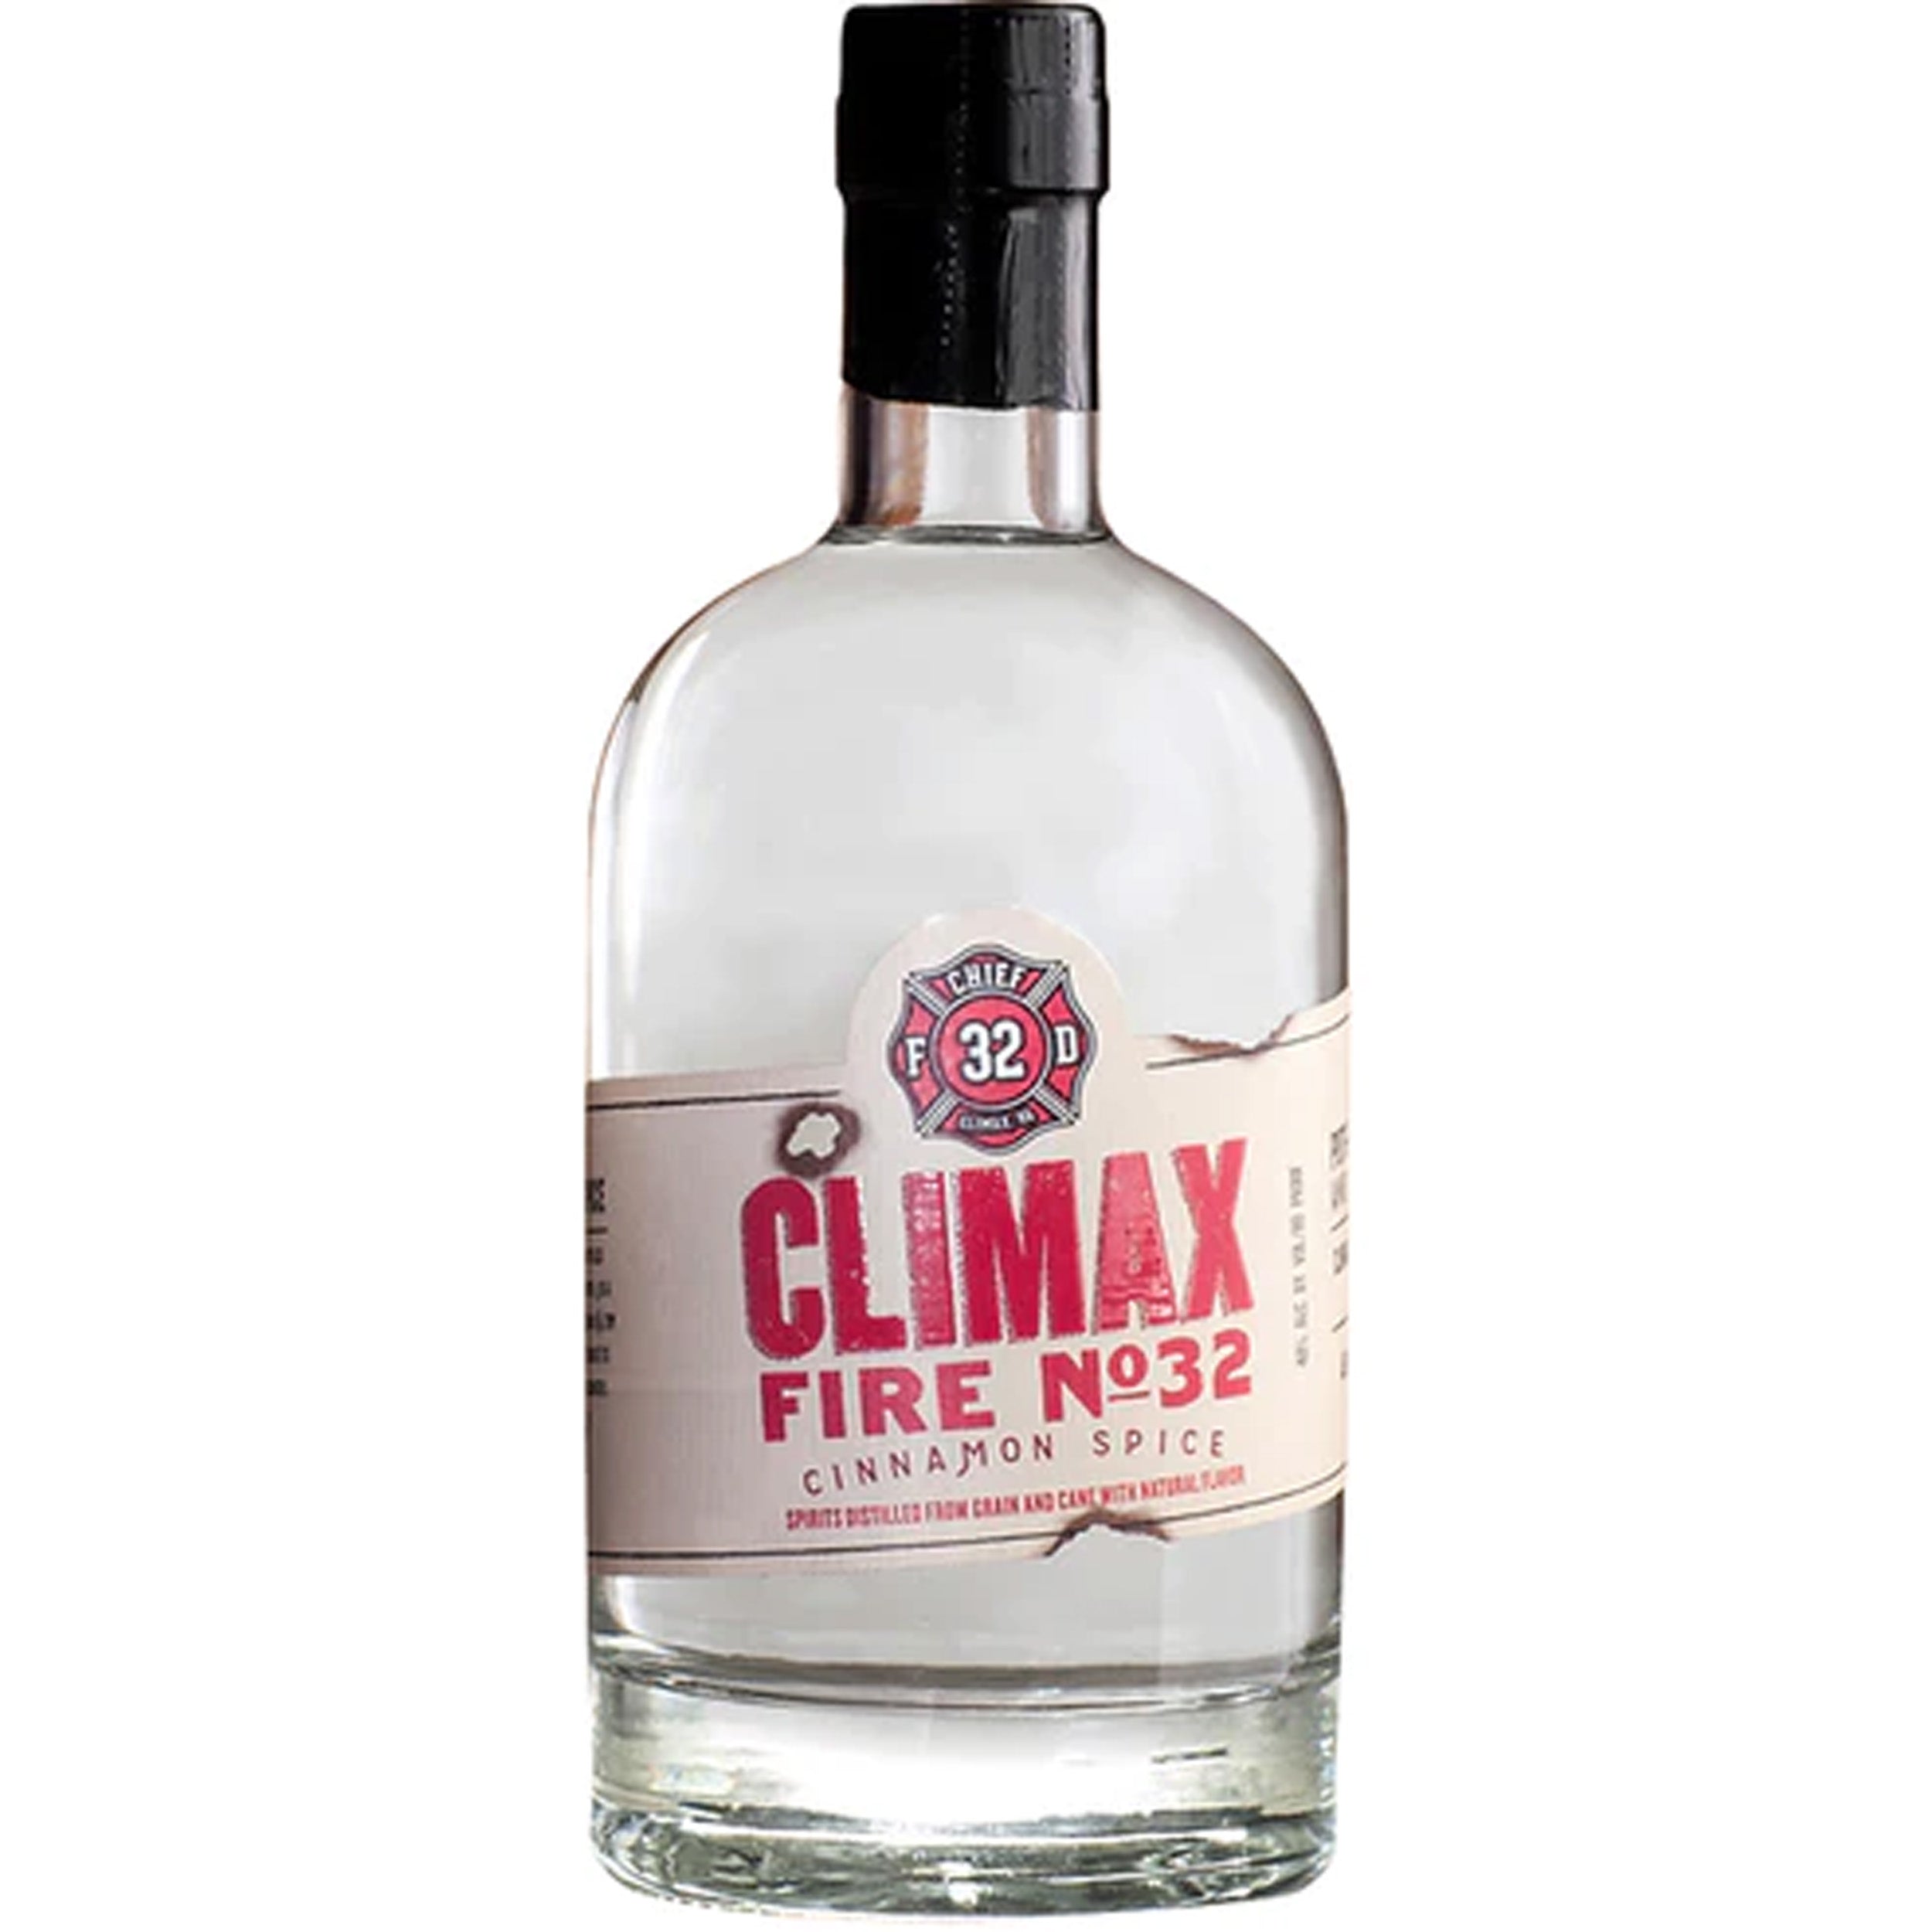 Climax Spirits Fire No. 32 Cinnamon Spice Moonshine